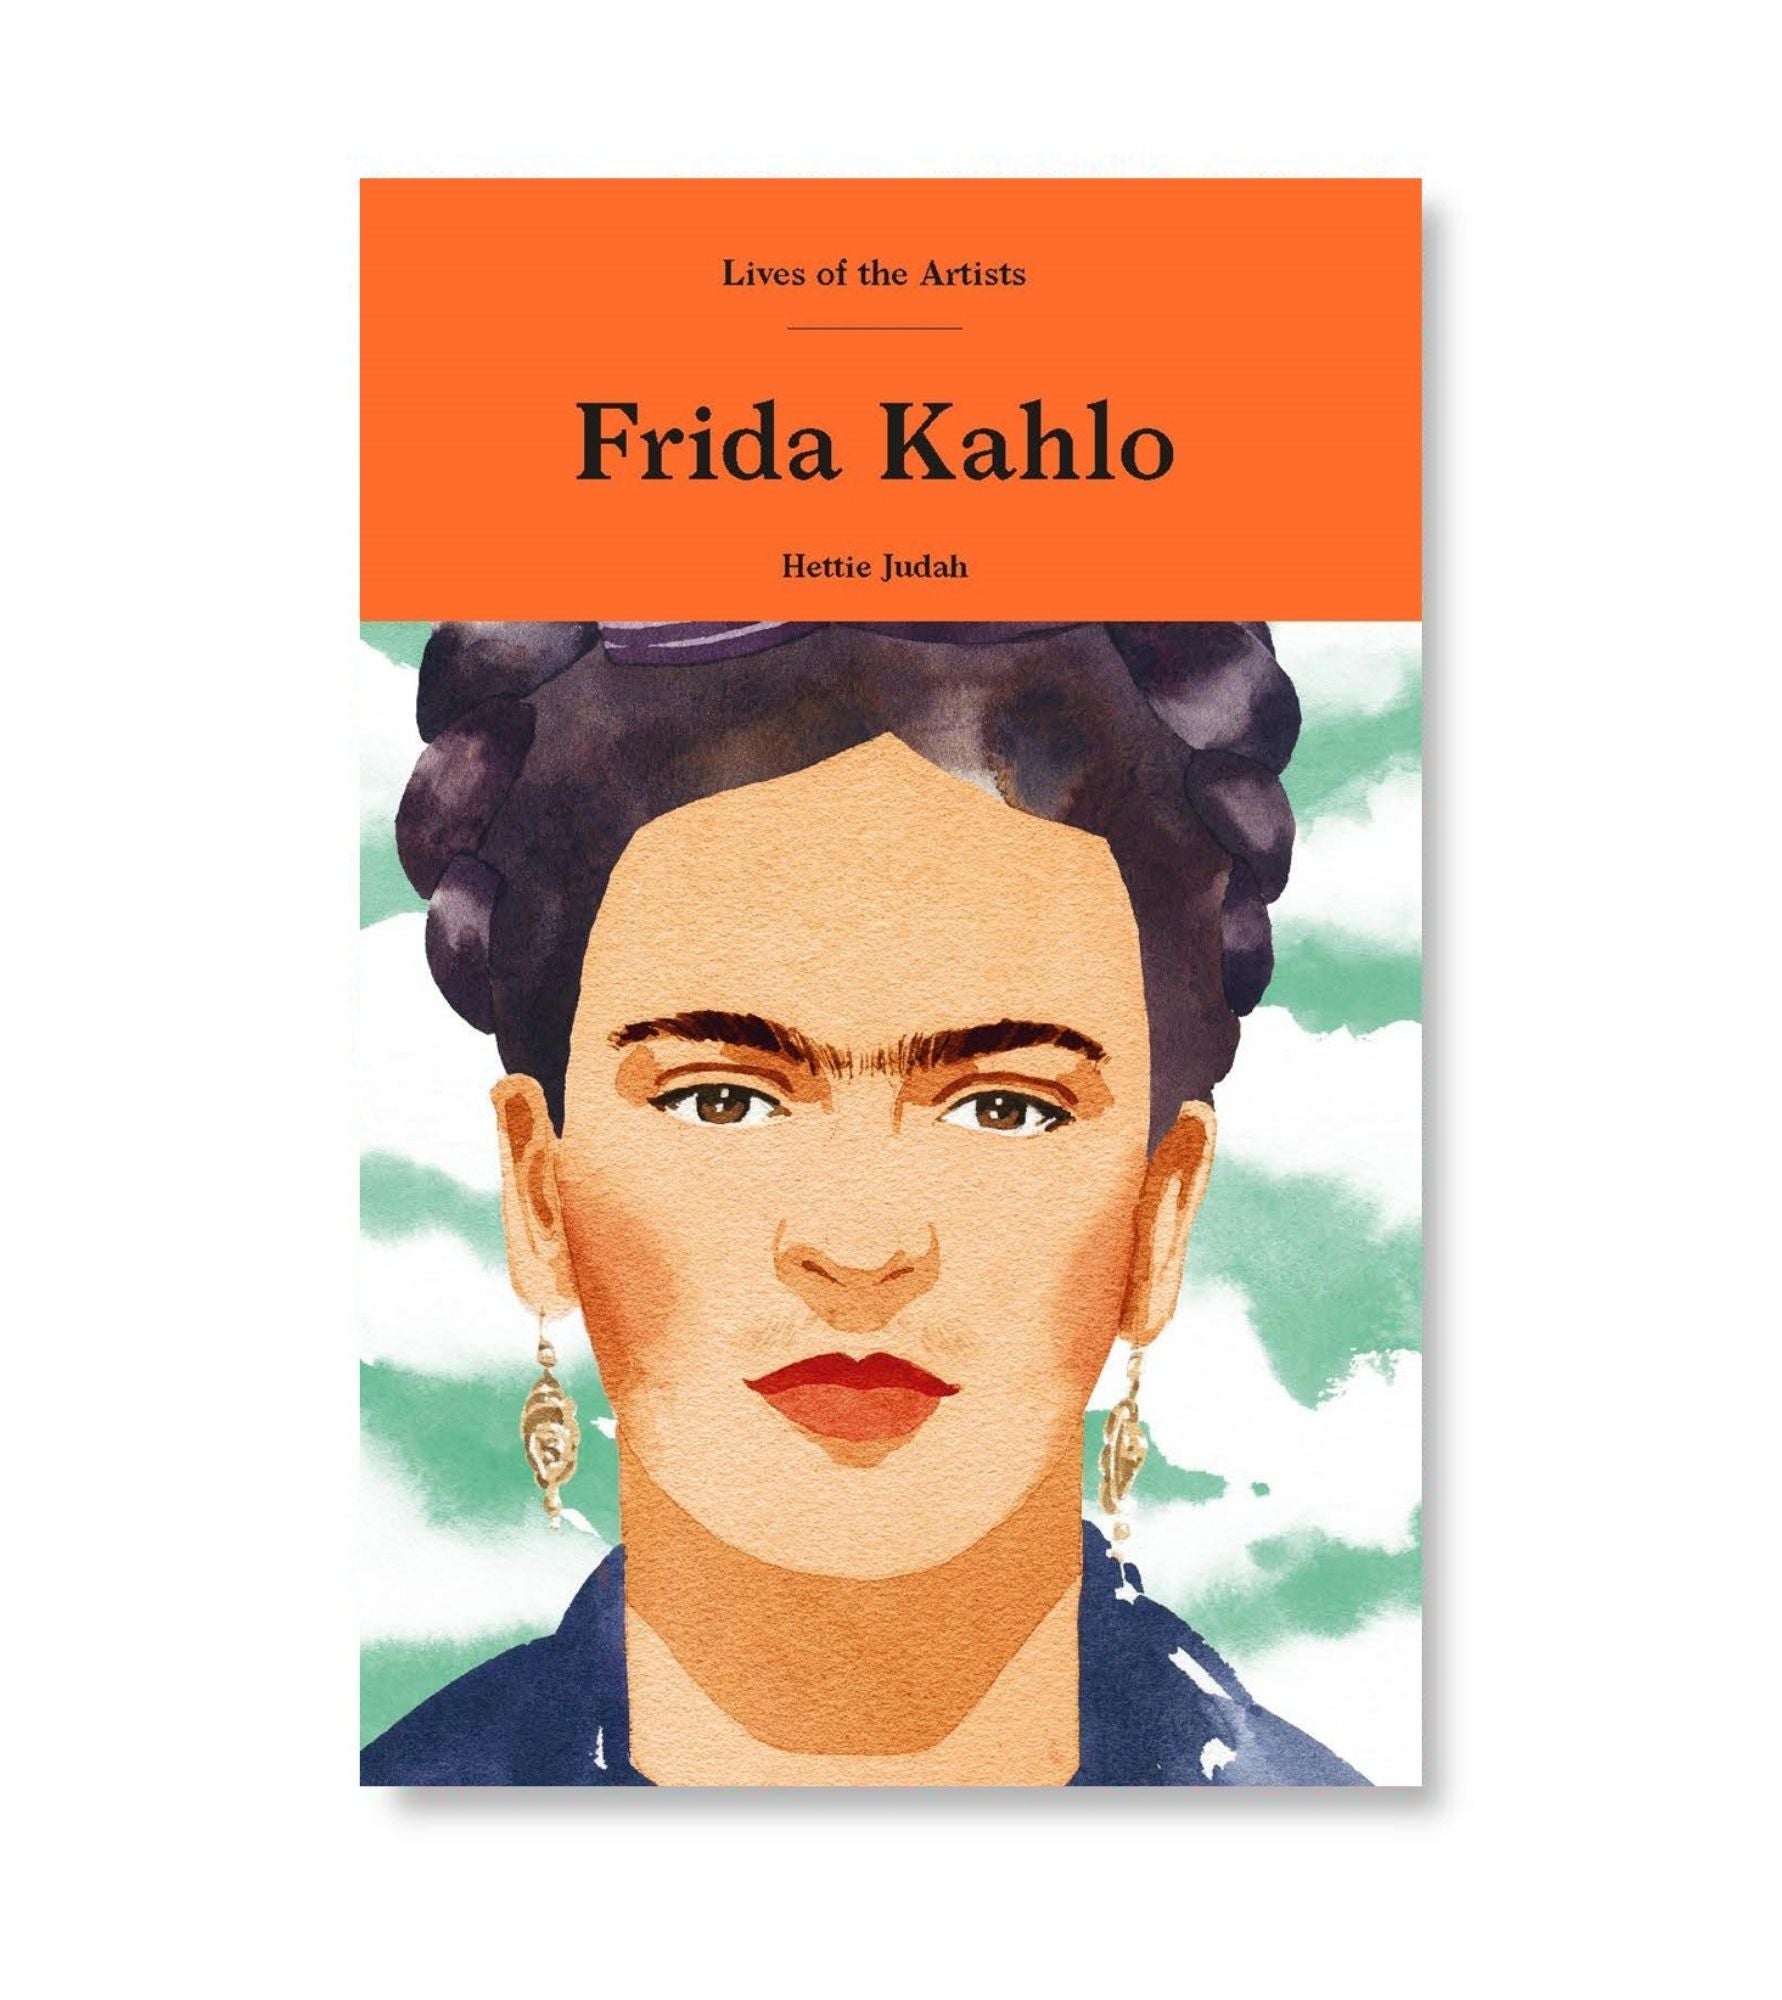 Frida Kahlo by Hettie Judah